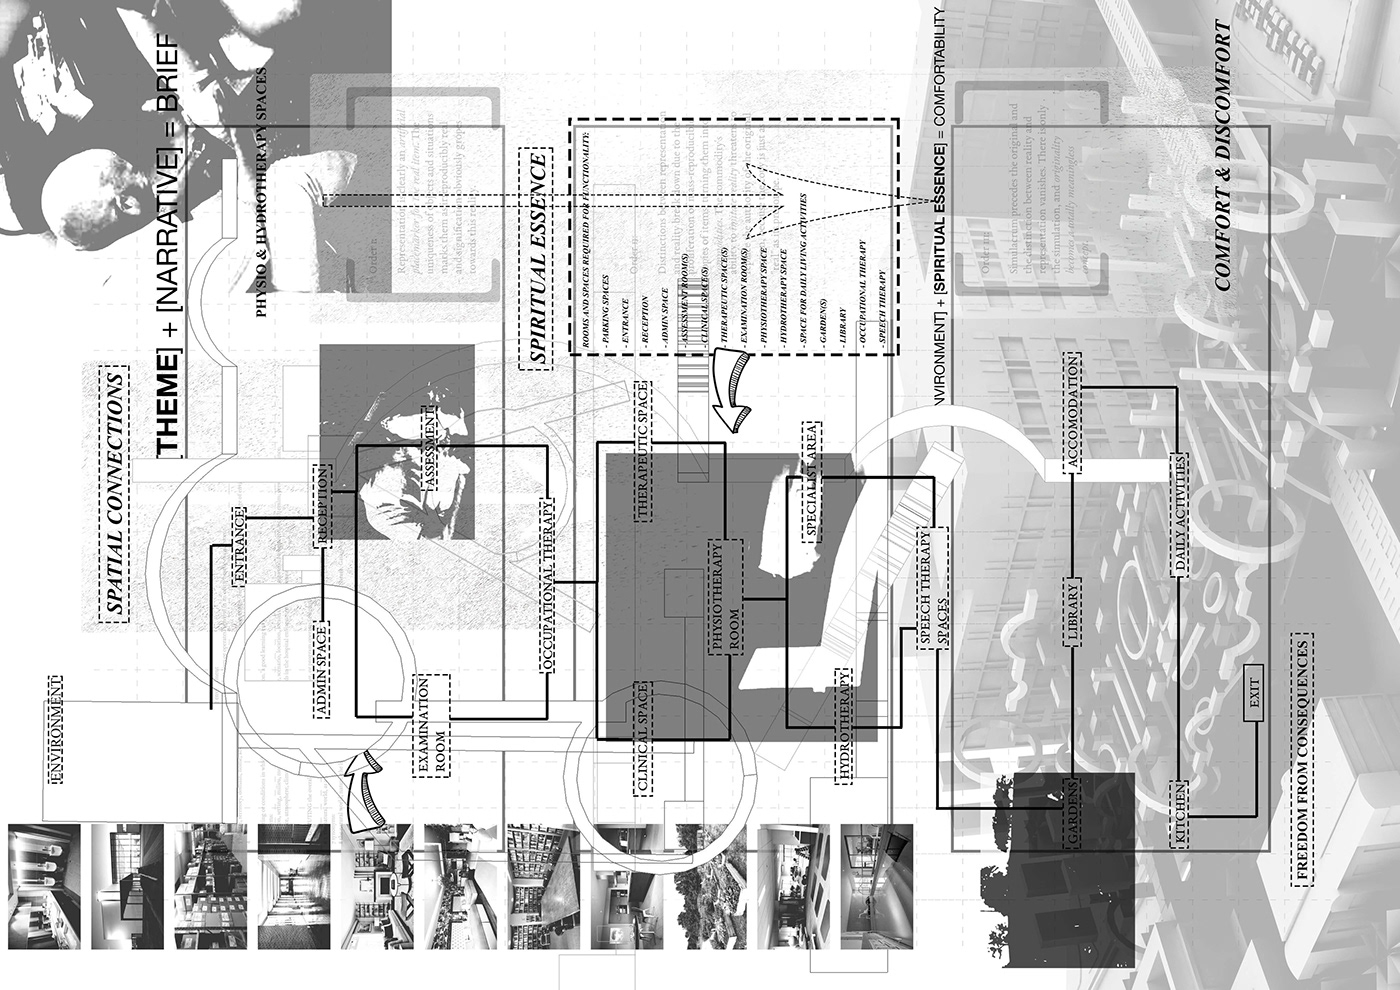 Technology architecture design simulation concept transcript simulacra baudrillard